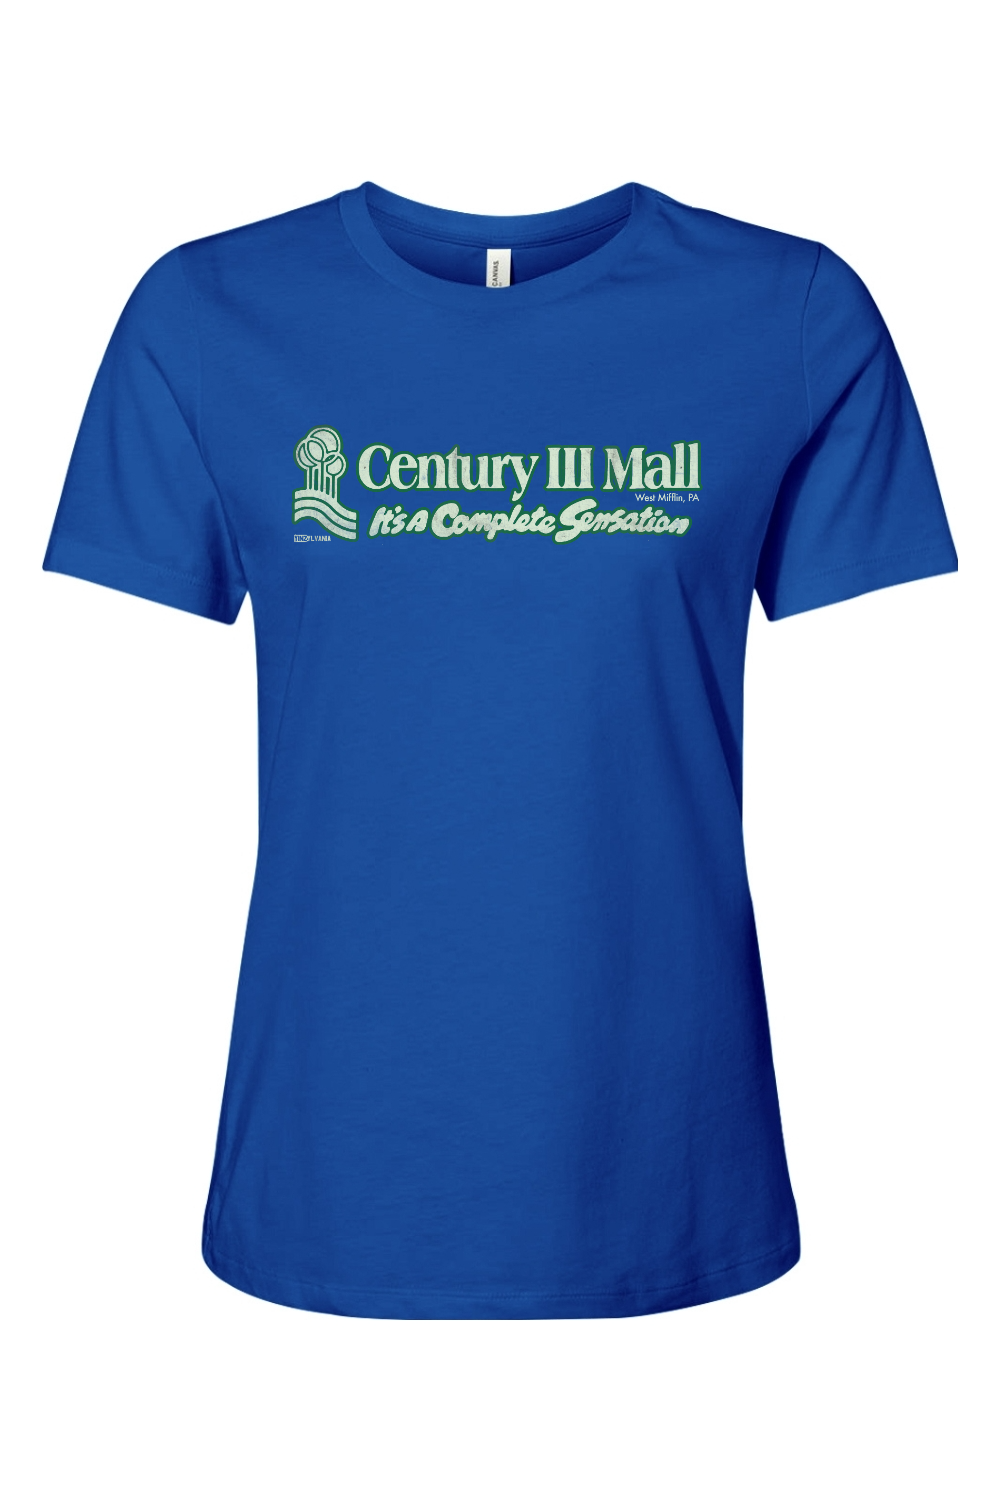 Century III Mall Ladies - Bella + Canvas Women’s Relaxed Jersey Short Sleeve Tee - Yinzylvania